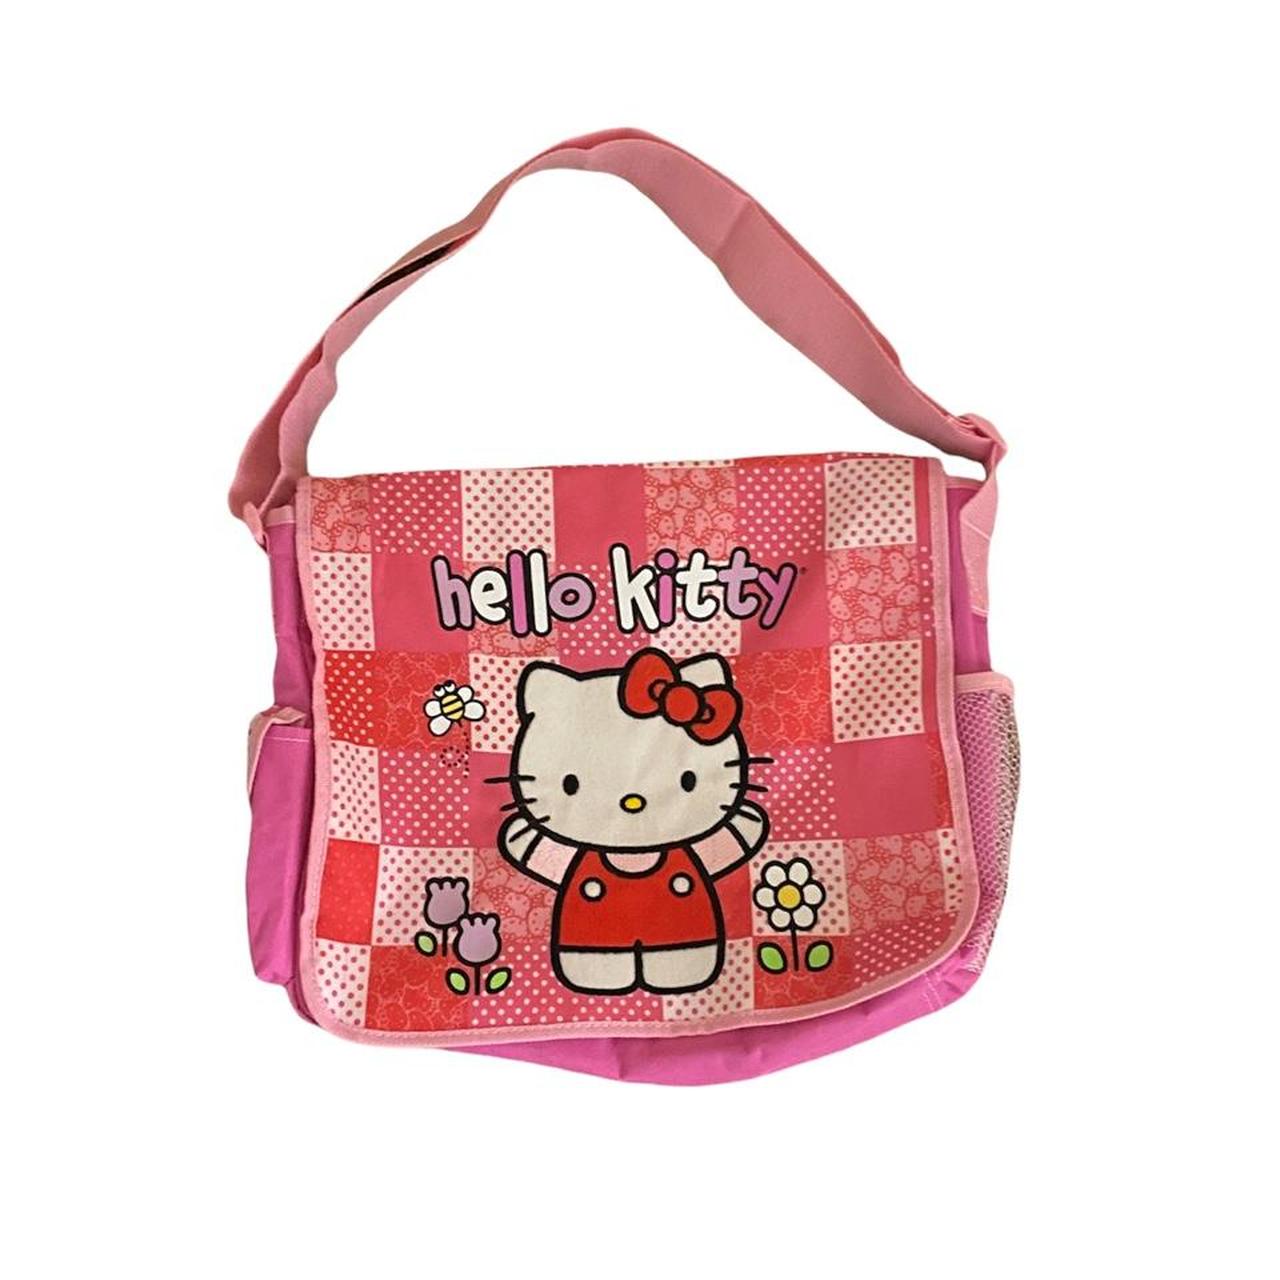 Hello kitty messenger bag, never worn, has lots of... - Depop